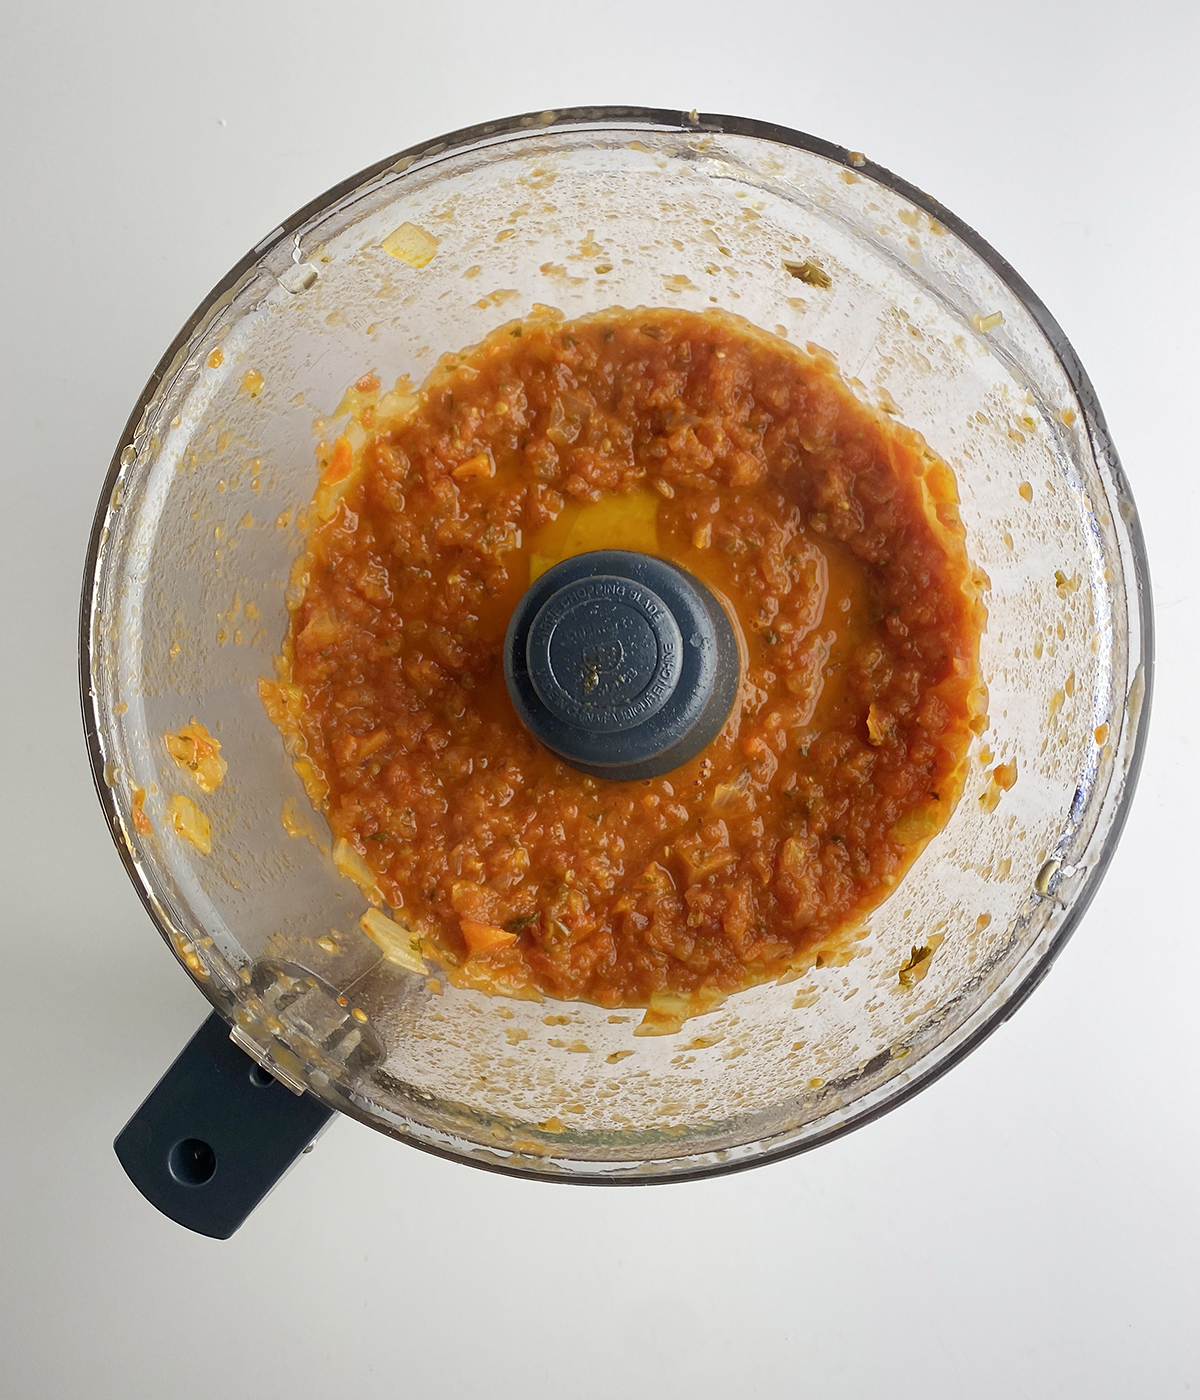 Tomato sauce pureed in a food processor